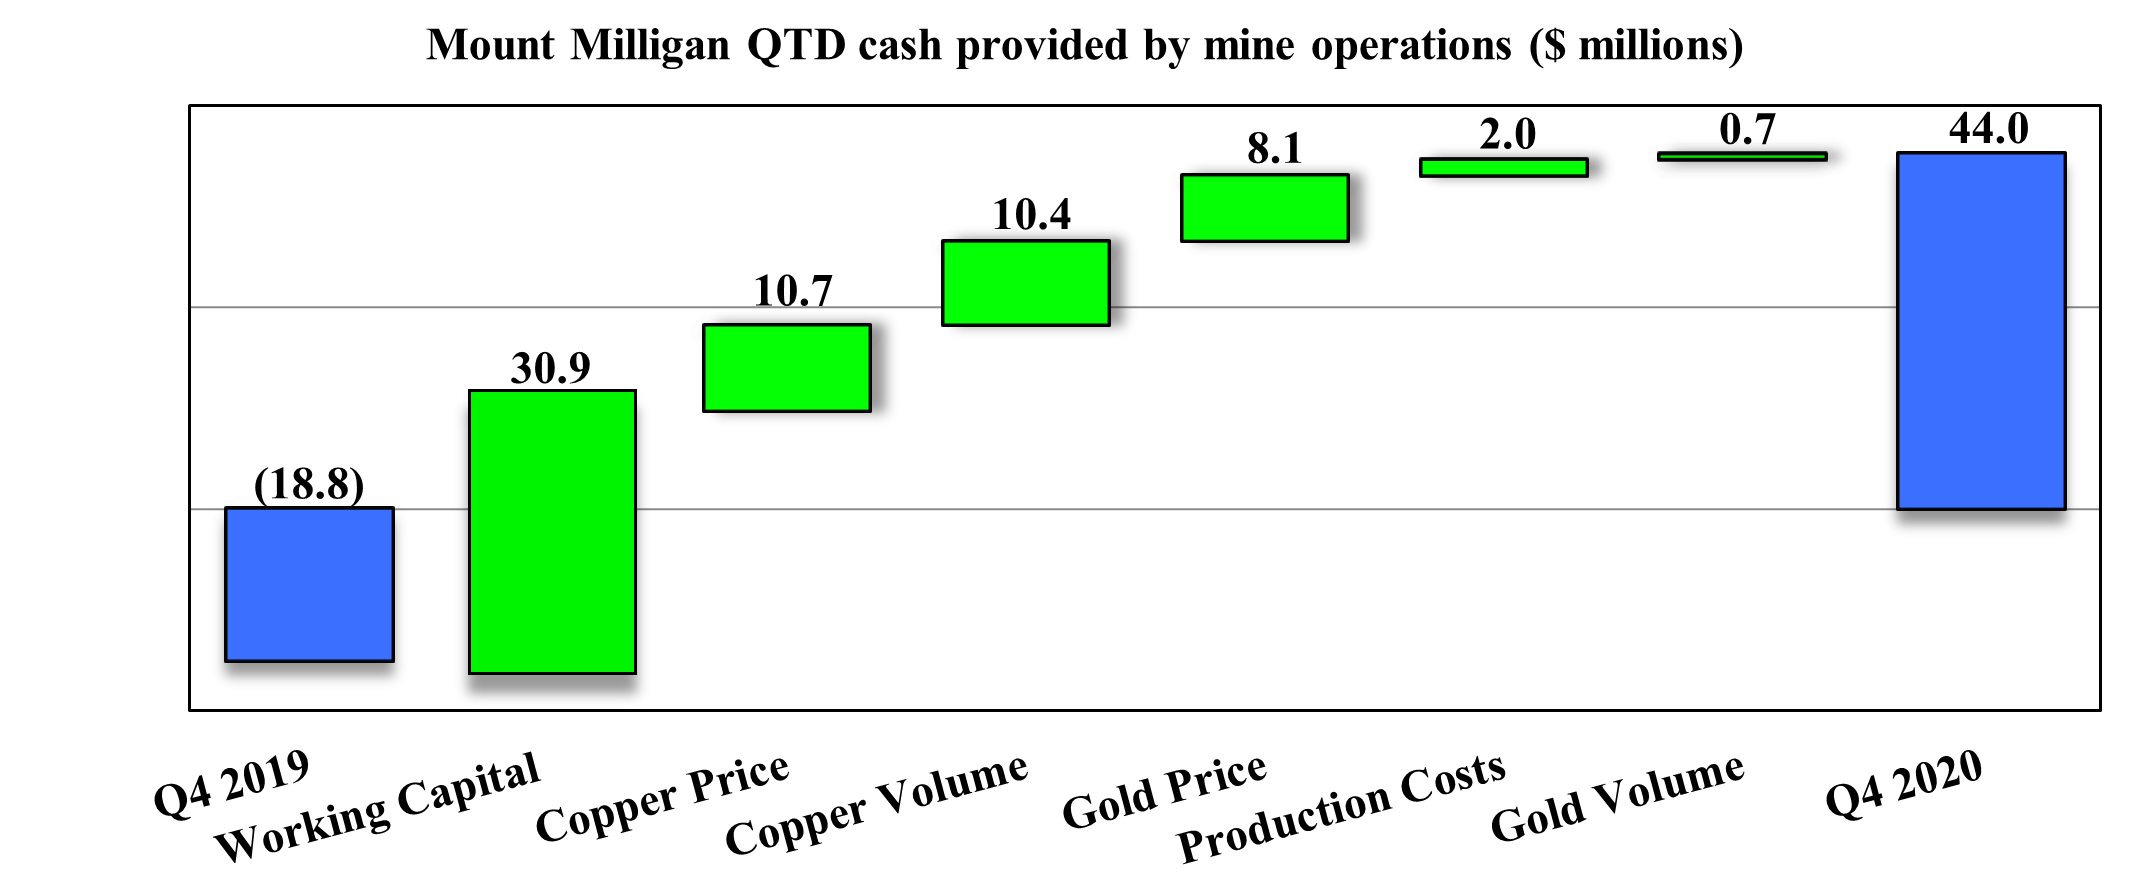 Mount Milligan QTD cash provided by mine operations ($ millions)